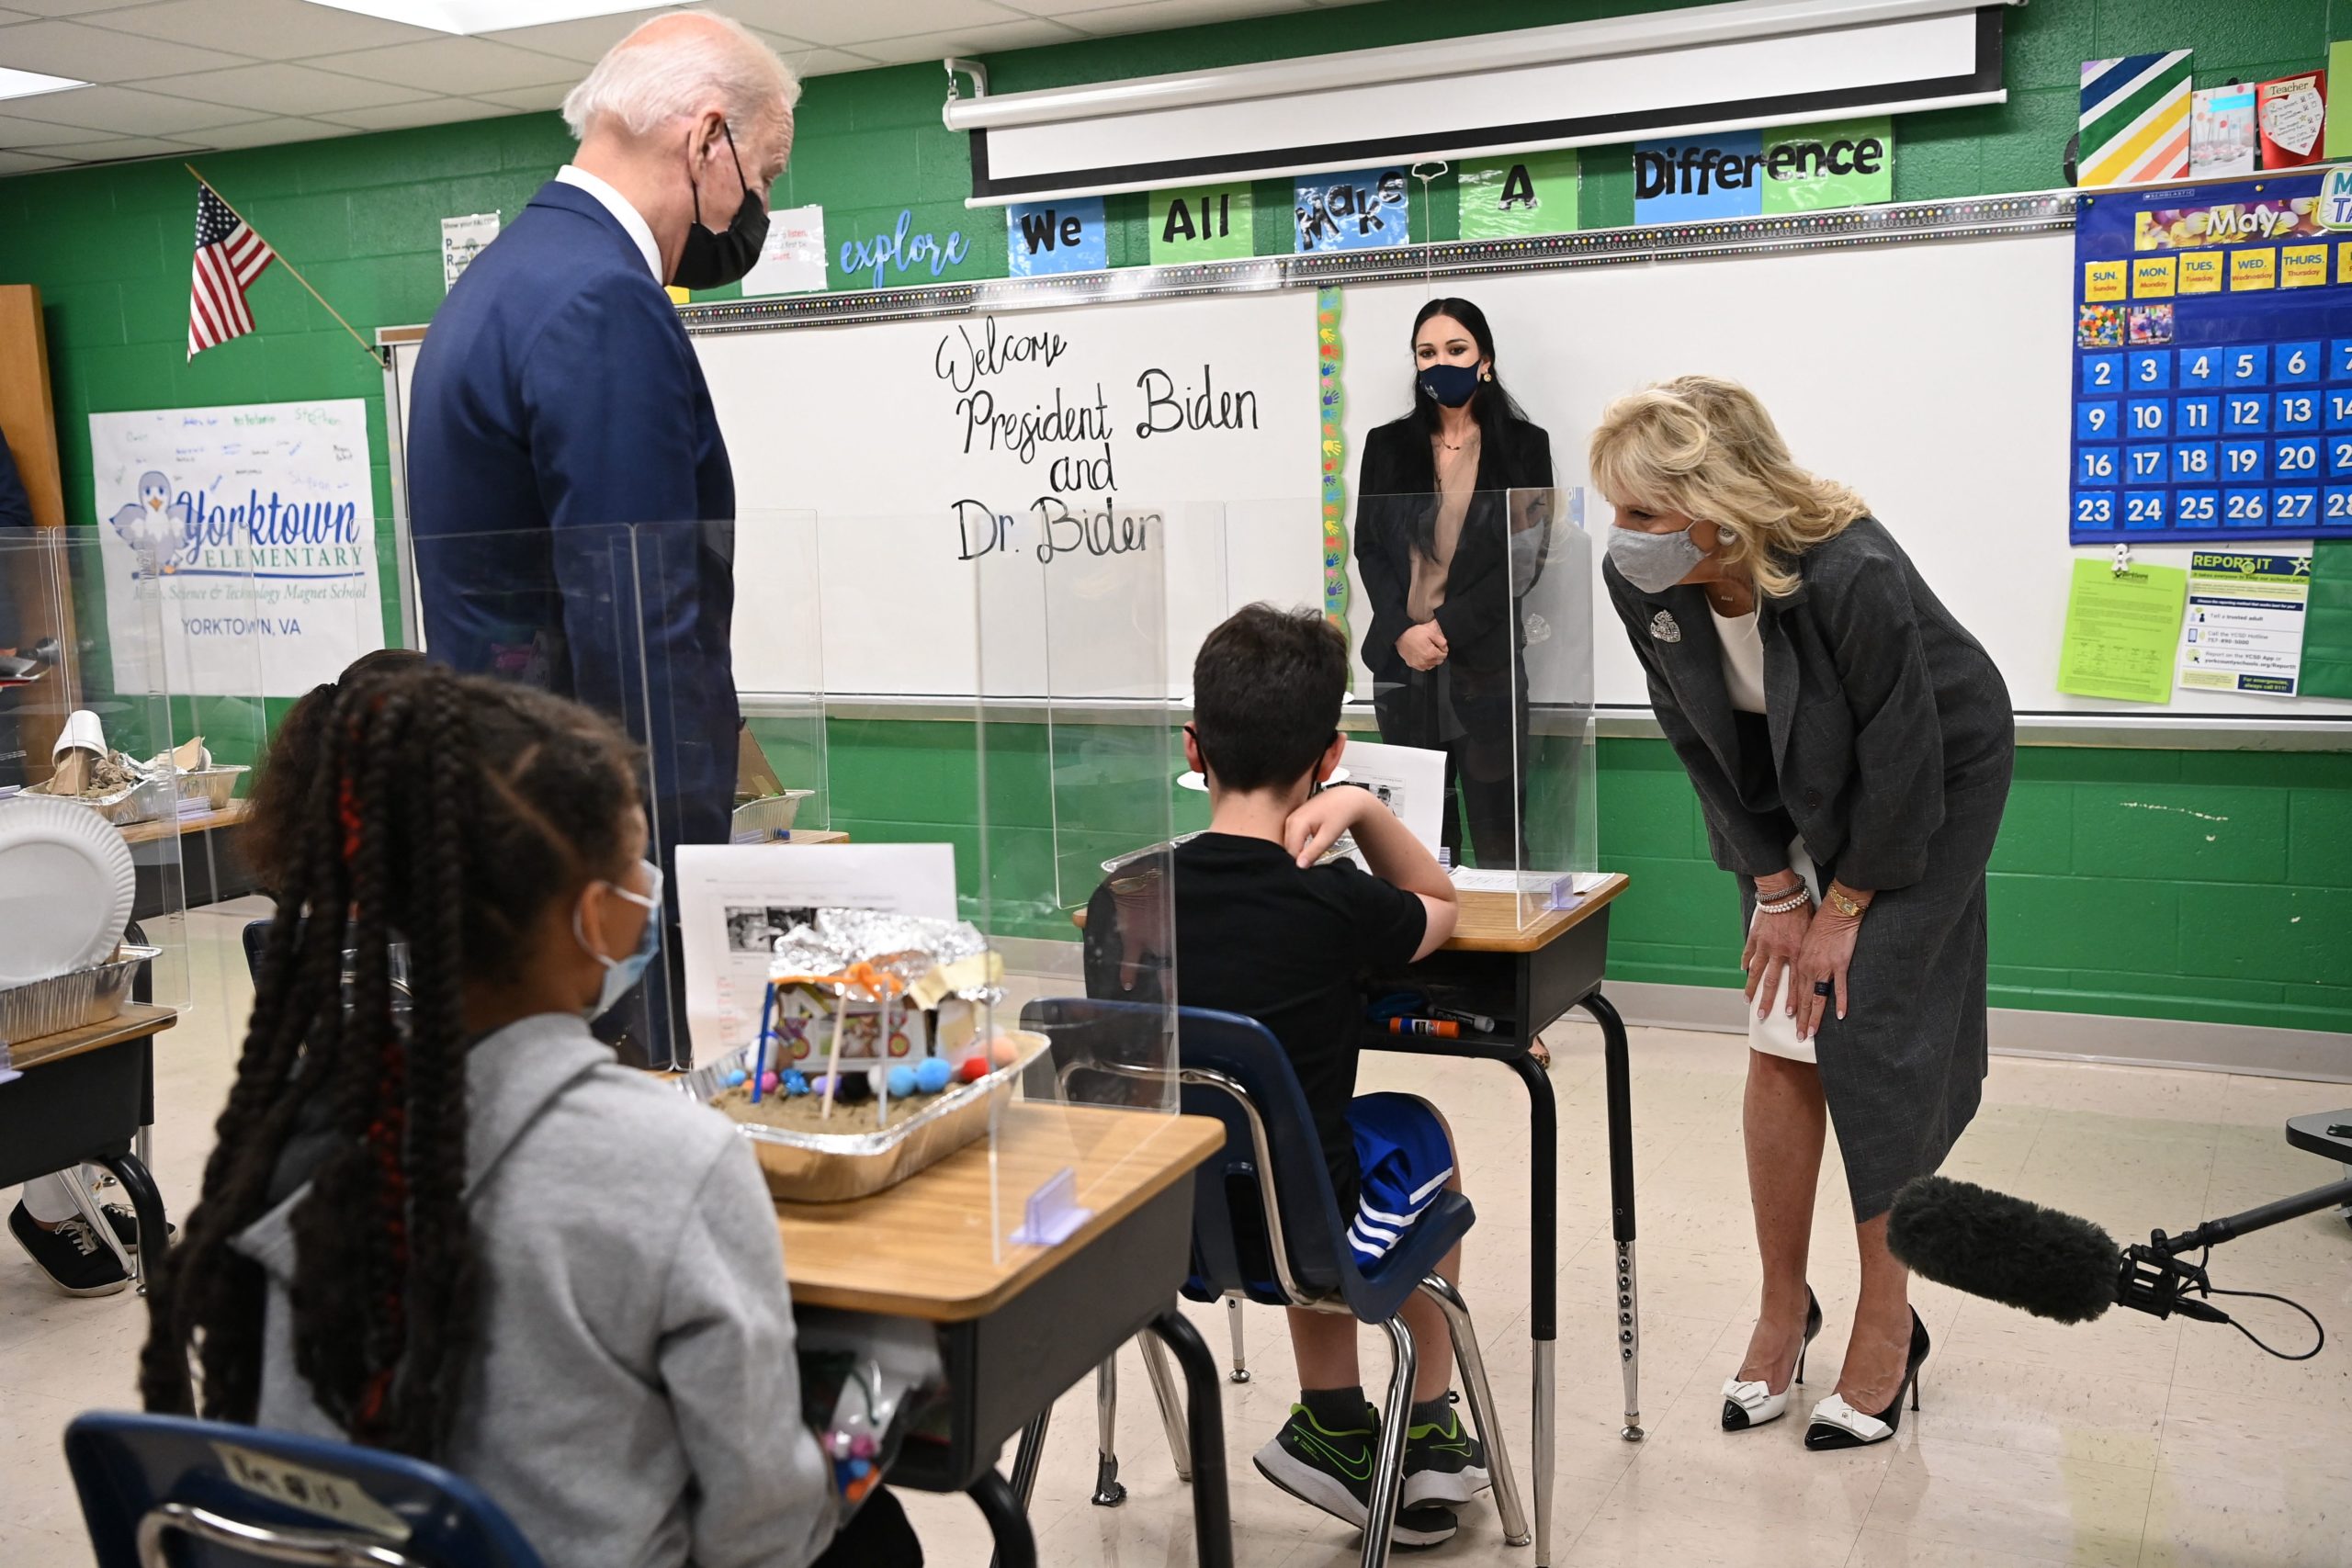 US President Joe Biden(L) and First Lady Jill Biden(R) visit the classroom of fifth-grade teacher Cindy Bertamini, at Yorktown Elementary School in Yorktown, Virginia on May 3, 2021. (Photo by MANDEL NGAN / AFP) (Photo by MANDEL NGAN/AFP via Getty Images)